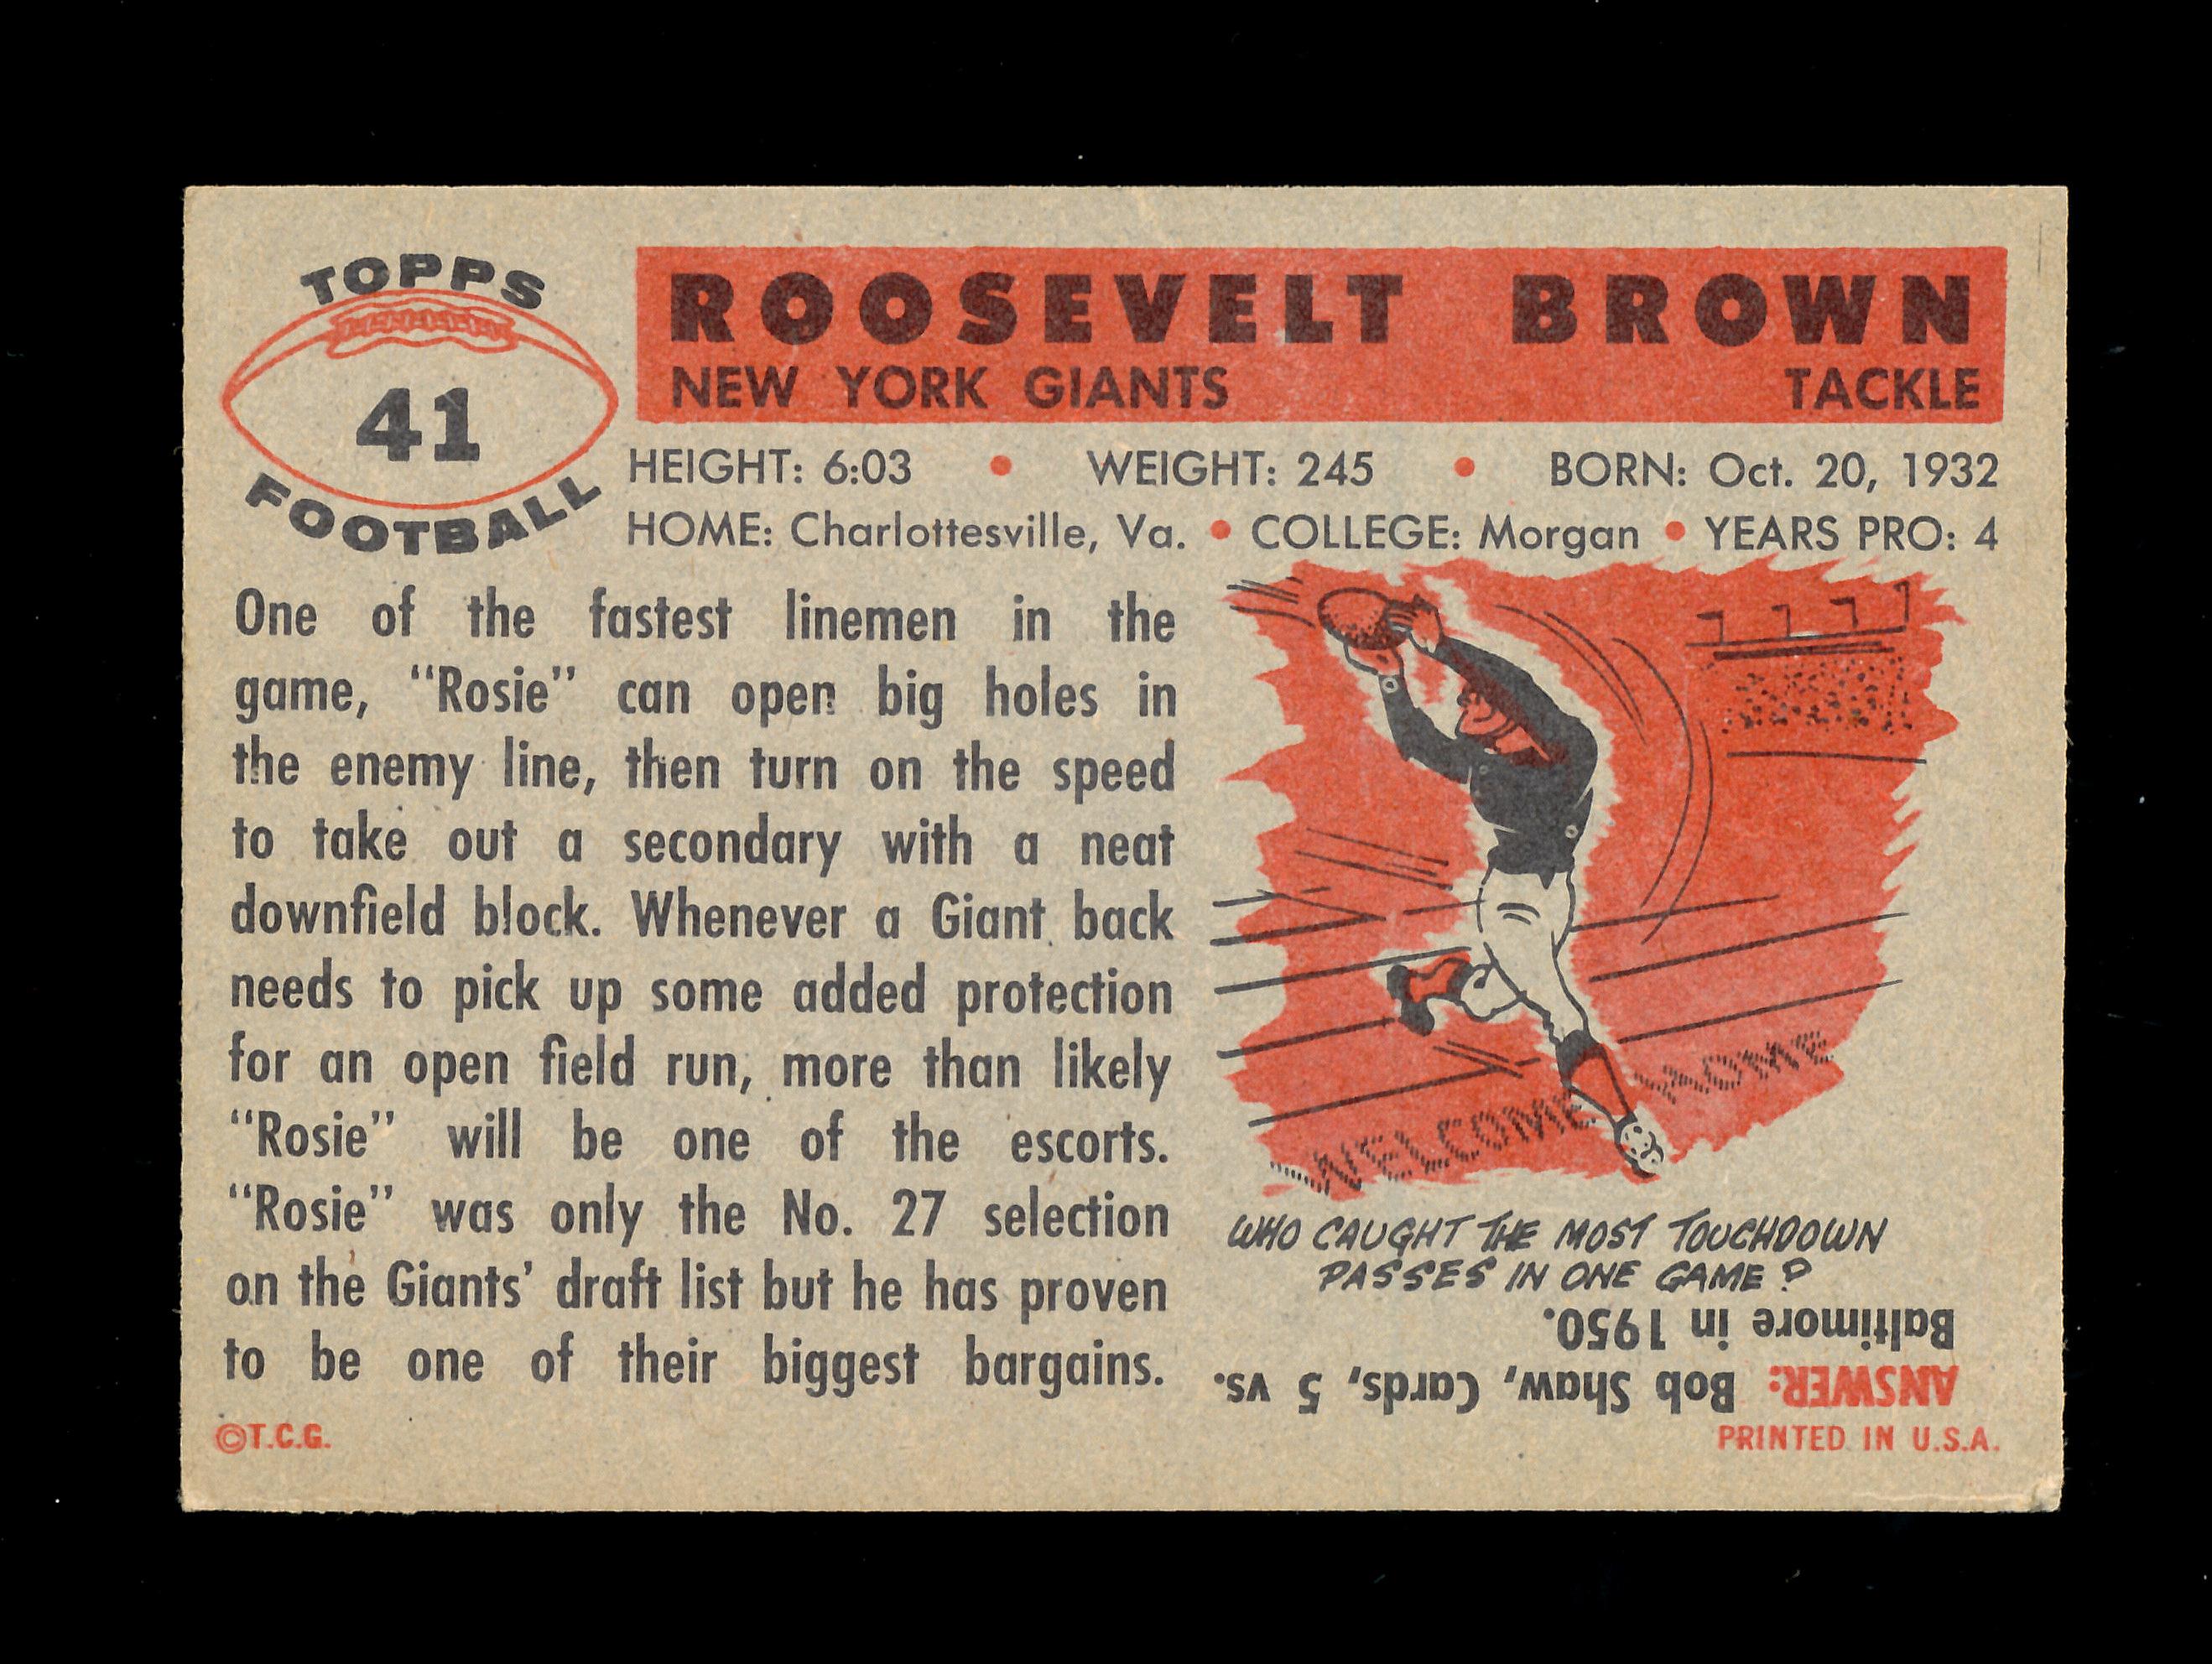 1956 Topps ROOKIE Football Card #41 Rookie Hall of Famer Roosevelt Brown Ne